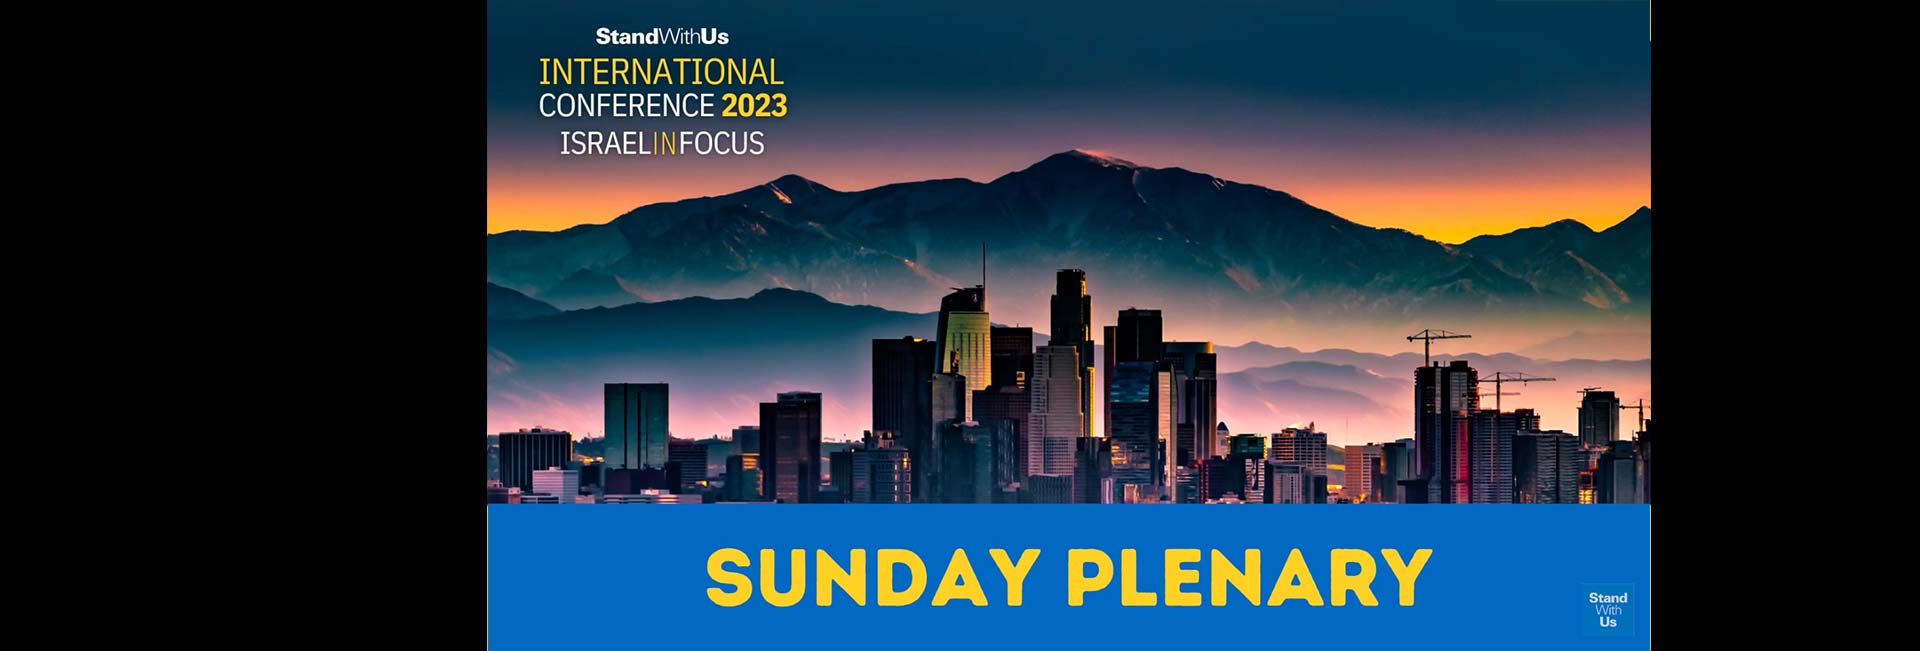 StandWithUs International Conference 2023: Sunday Plenary